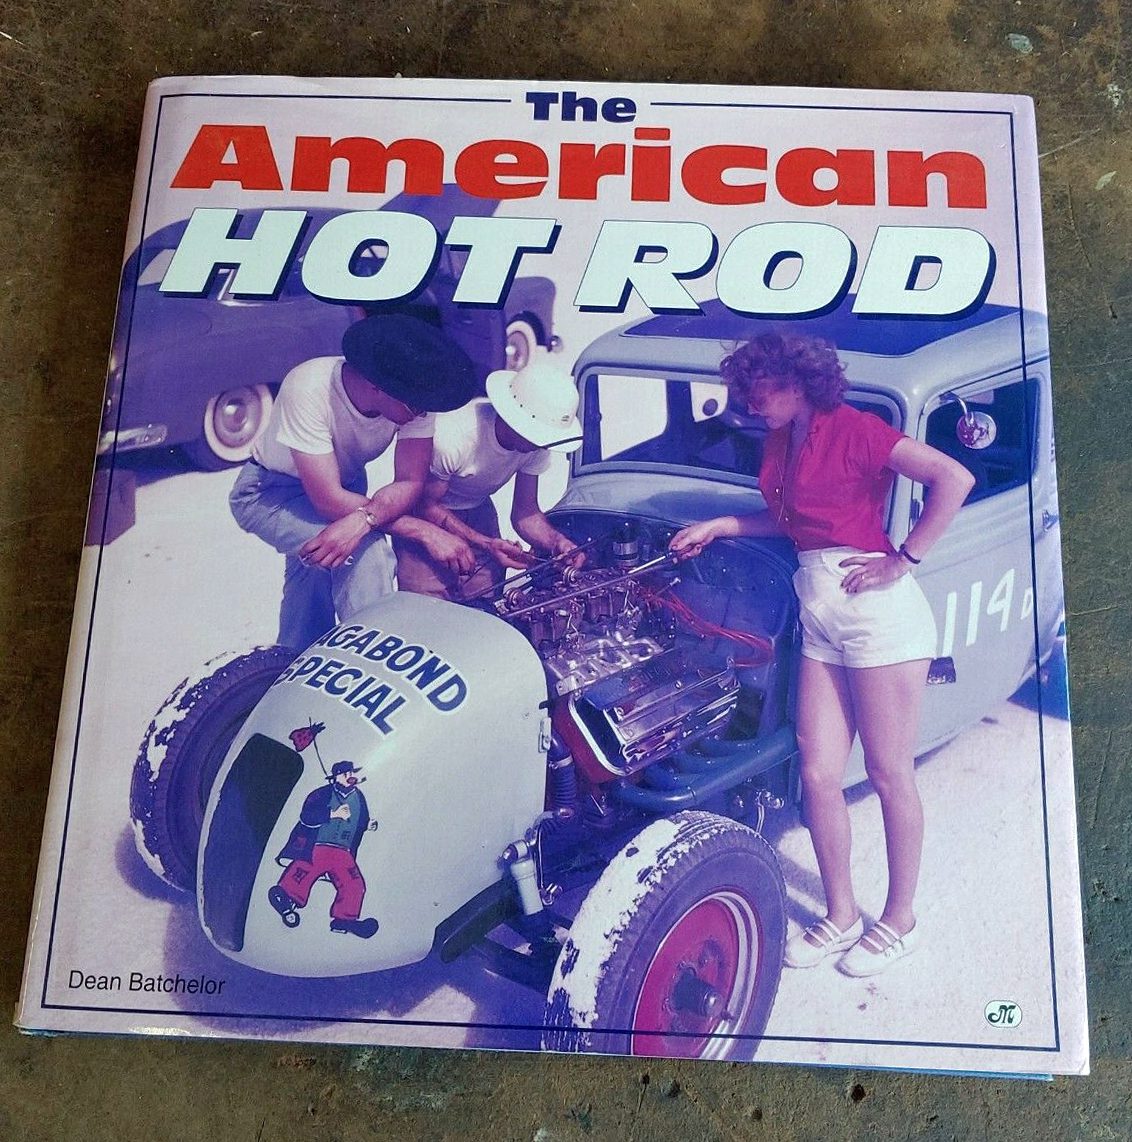 Dean Batchelor, the american hot rod book